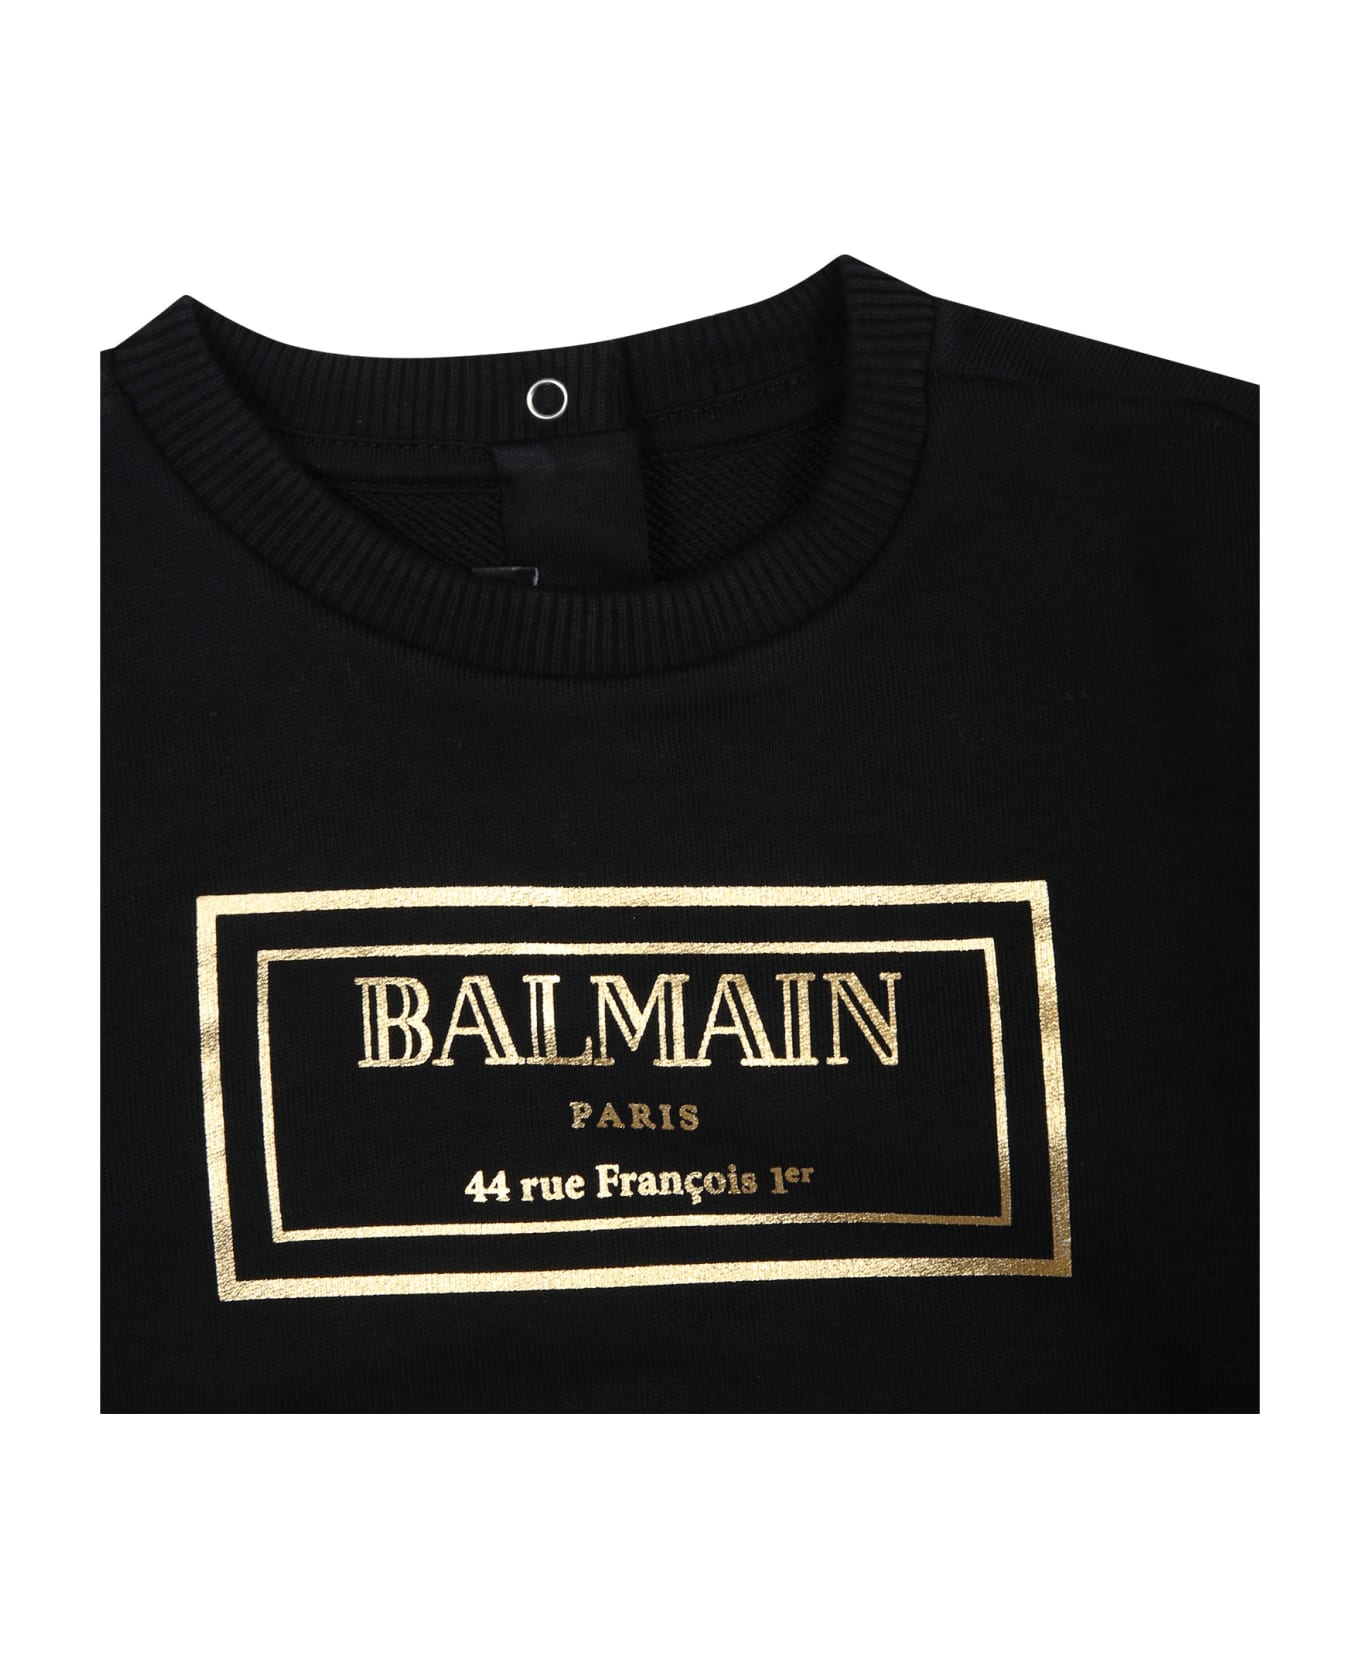 Balmain Black Sweatshirt For Babies With Gold Logo - Black